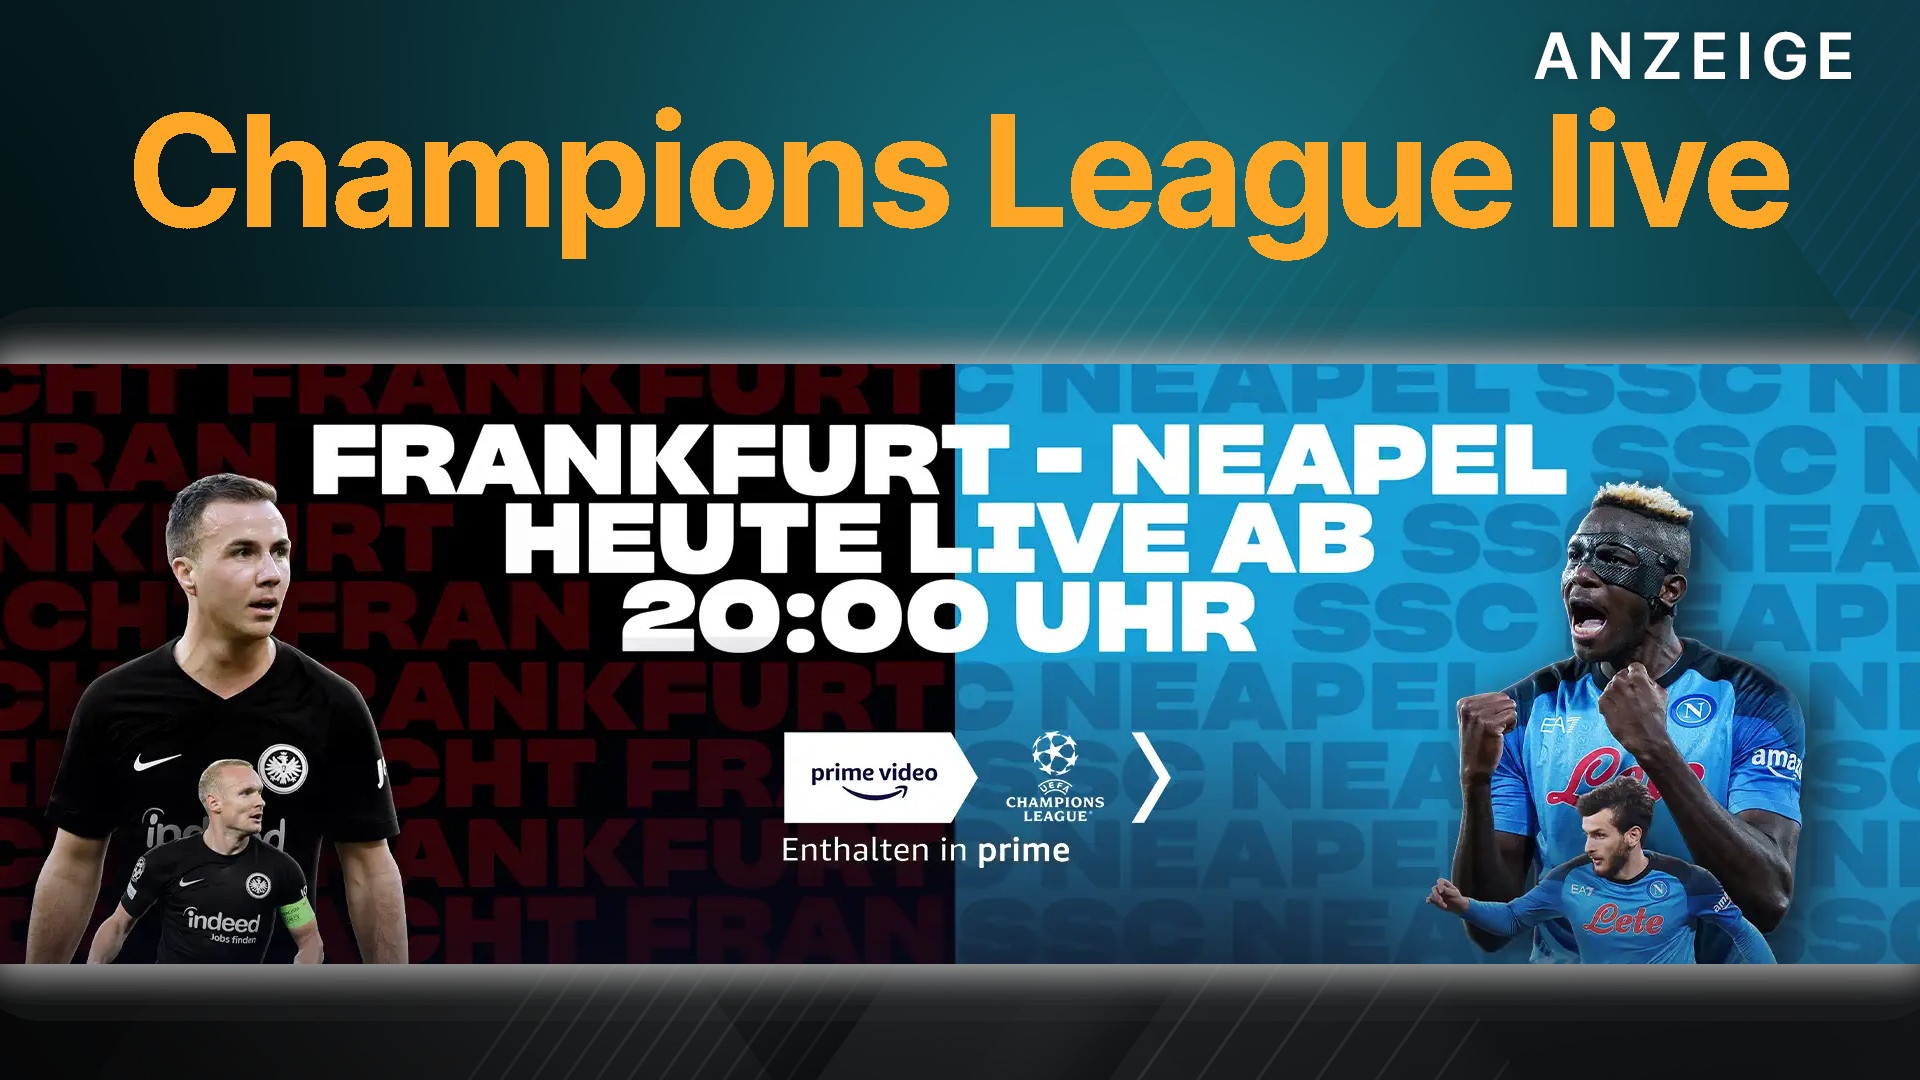 eintracht frankfurt champions league live